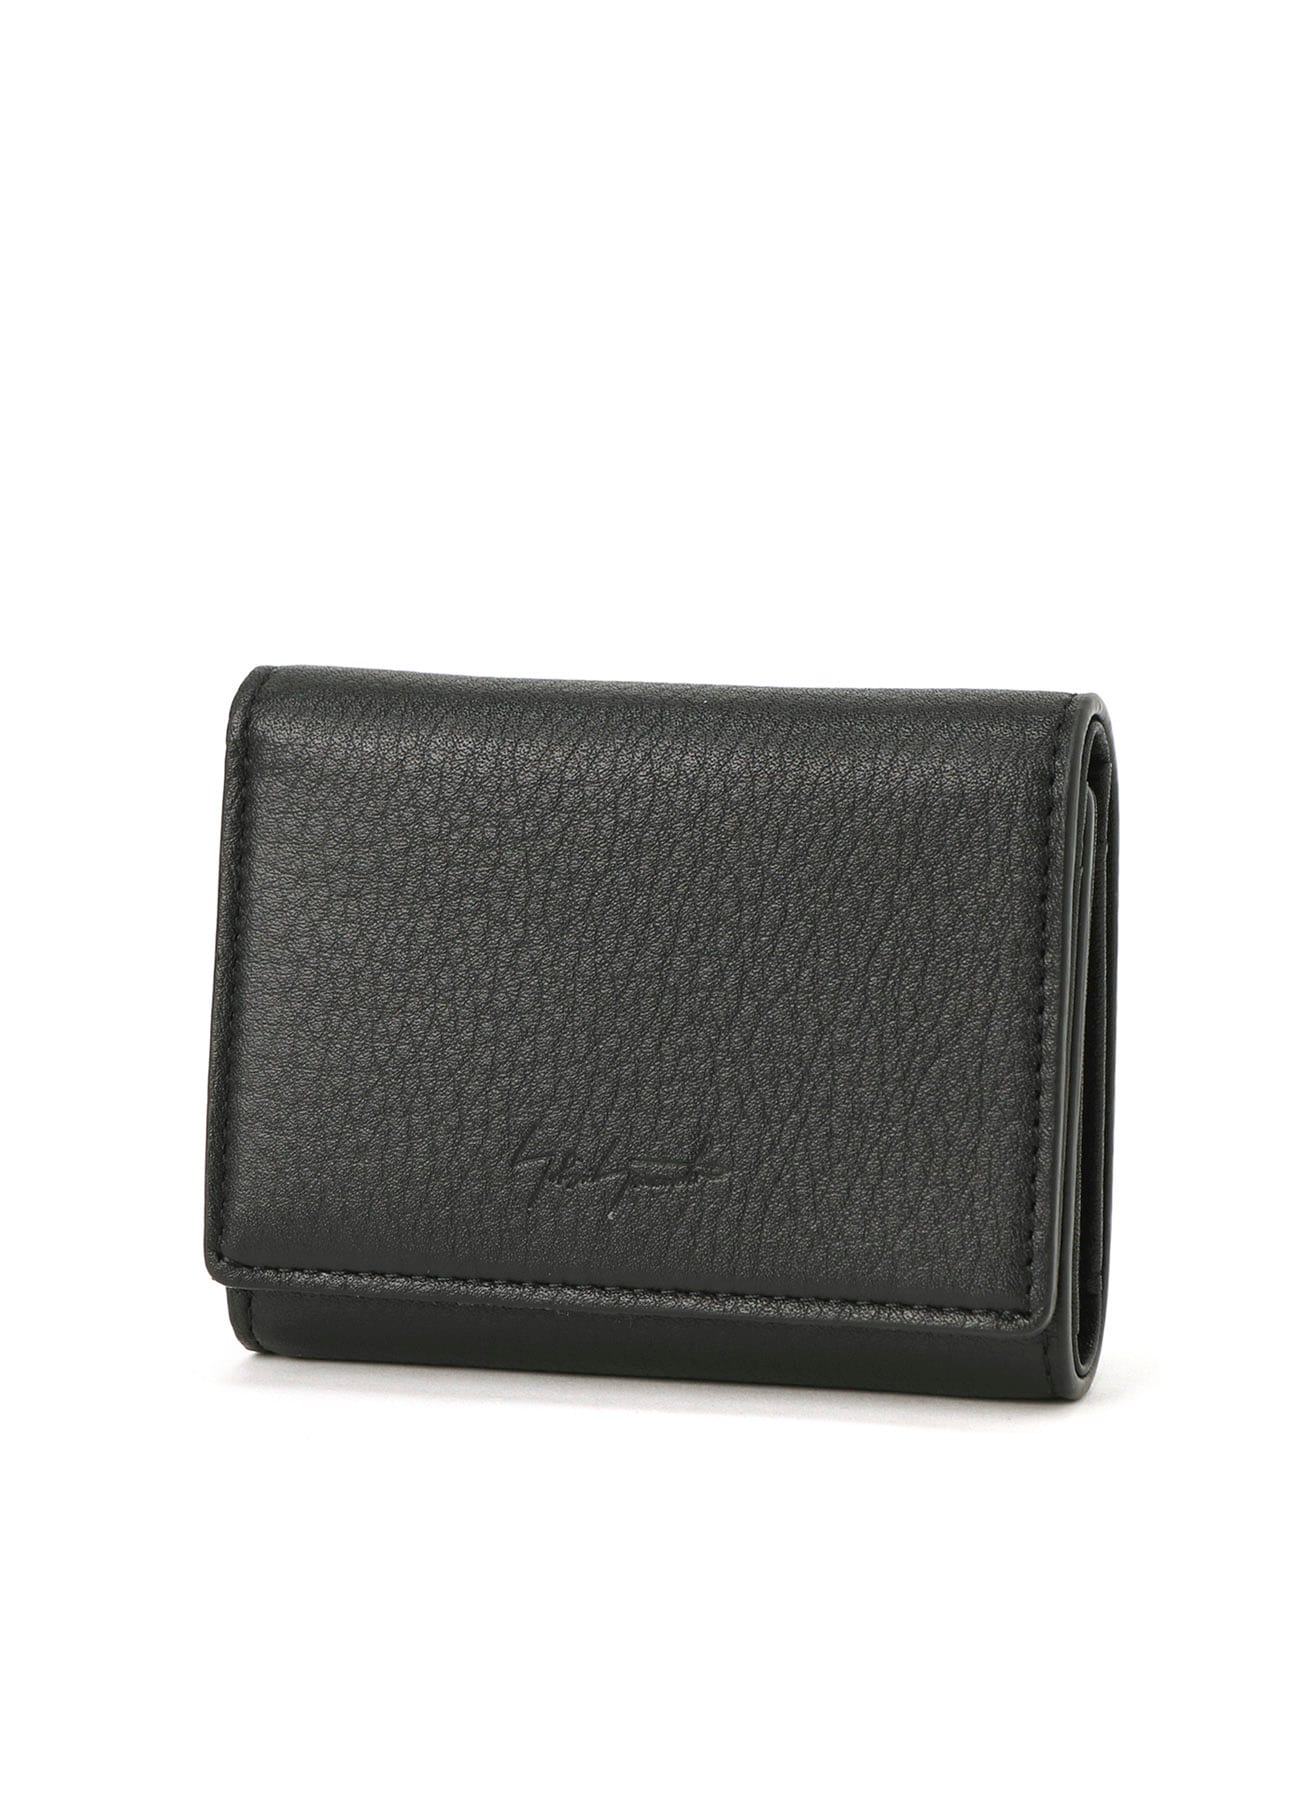 Lacoste Compact Monogram Wallet Black